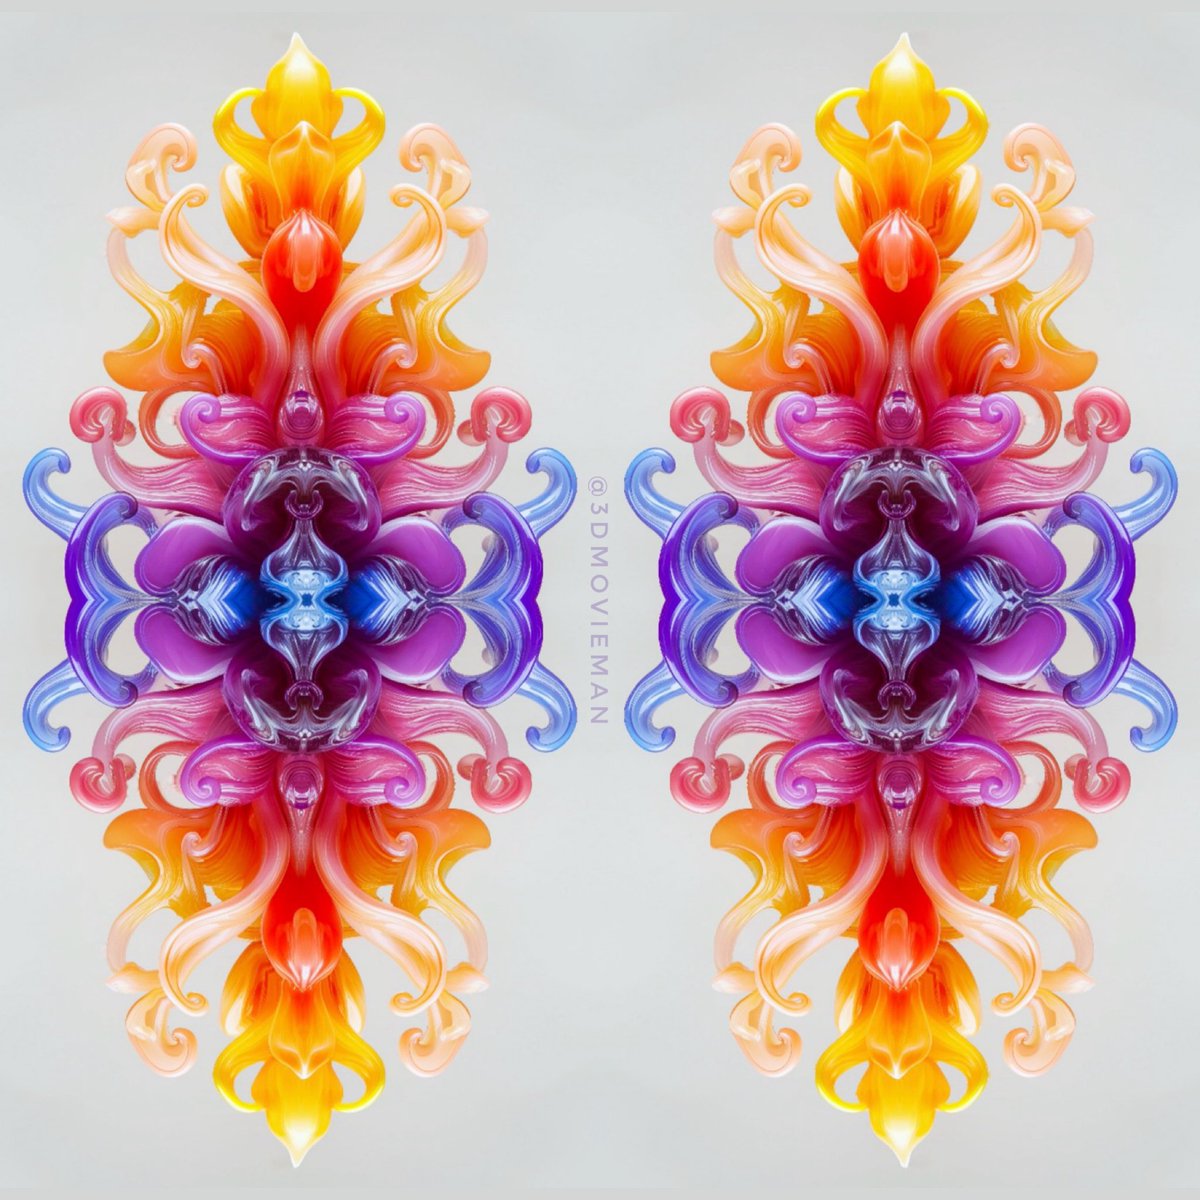 Colorful #stereoscopic glass #midjourneyArt 

#stereoscopy #synthography #fractalart #symmetrical #3dart